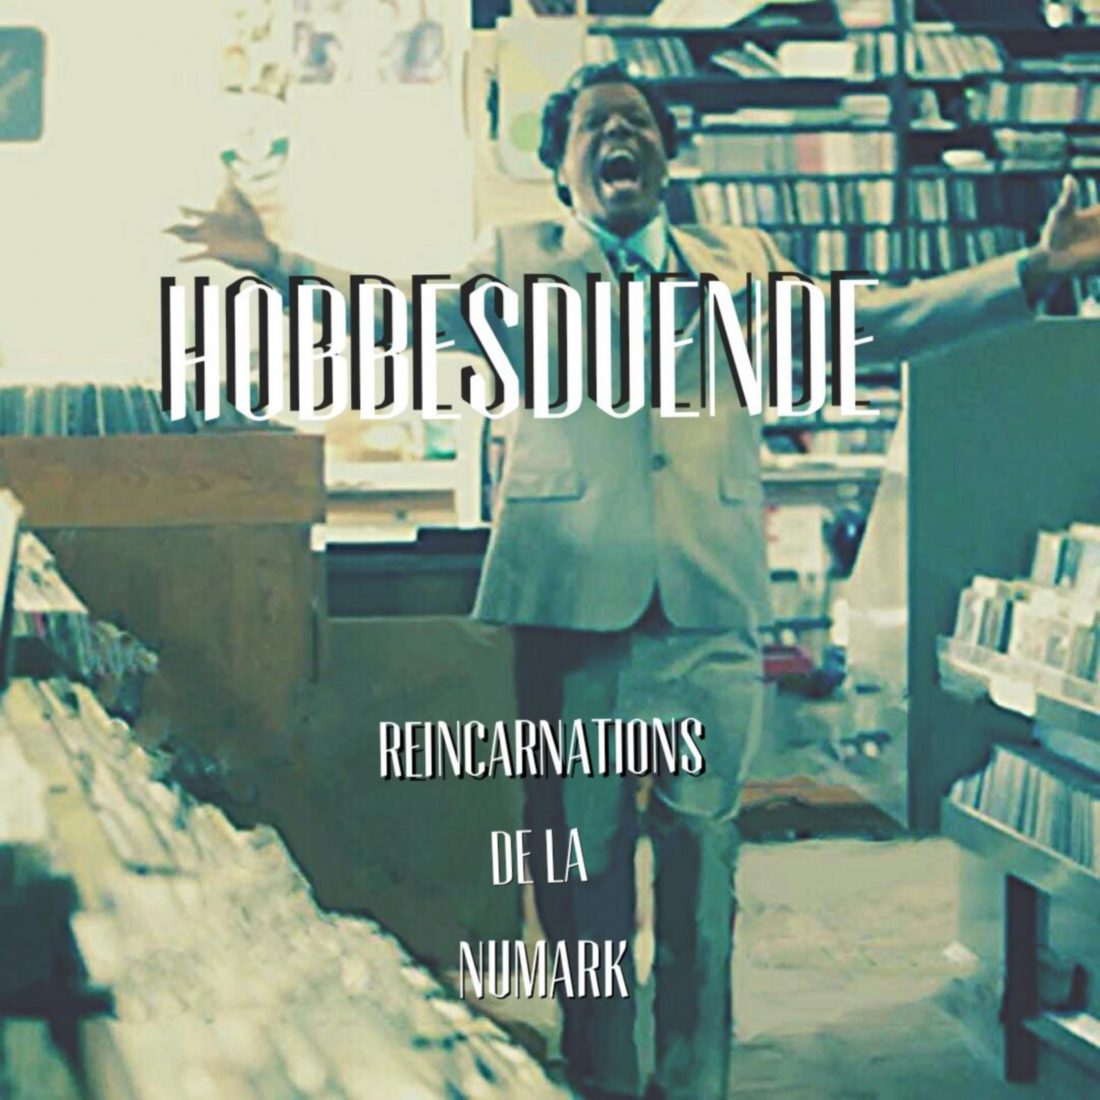 Hobbes Duende - "Reincarnations de la Numark" (Release)